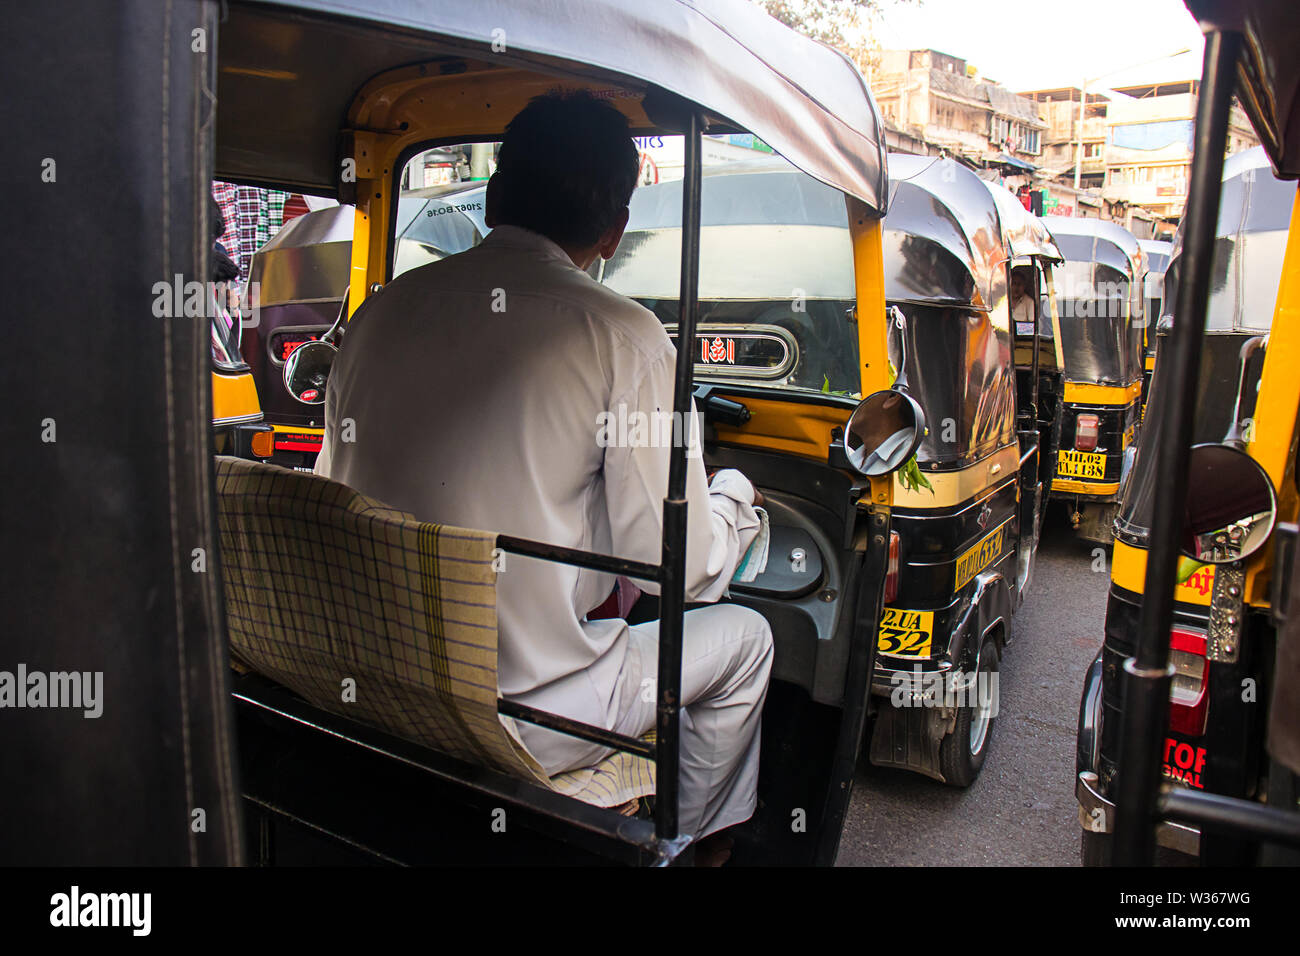 Mumbai, Maharashtra, india - JUNE 4th, 2019 : Man driving auto-rickshaw taxi mumbai street traffic - Image Stock Photo